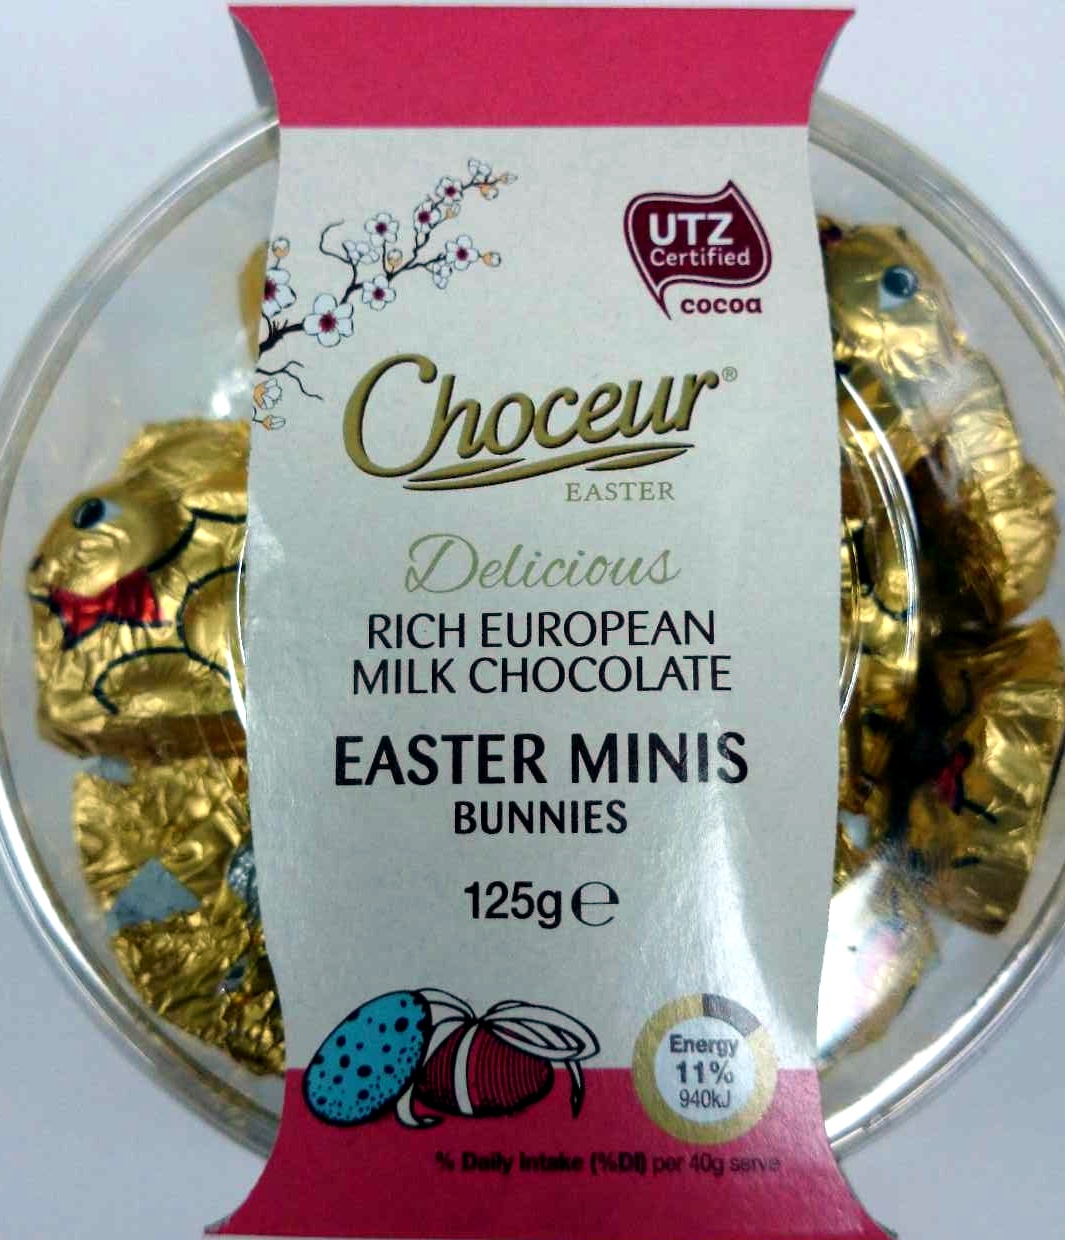 Rich European Milk Chocolate Easter Minis Bunnies - Product